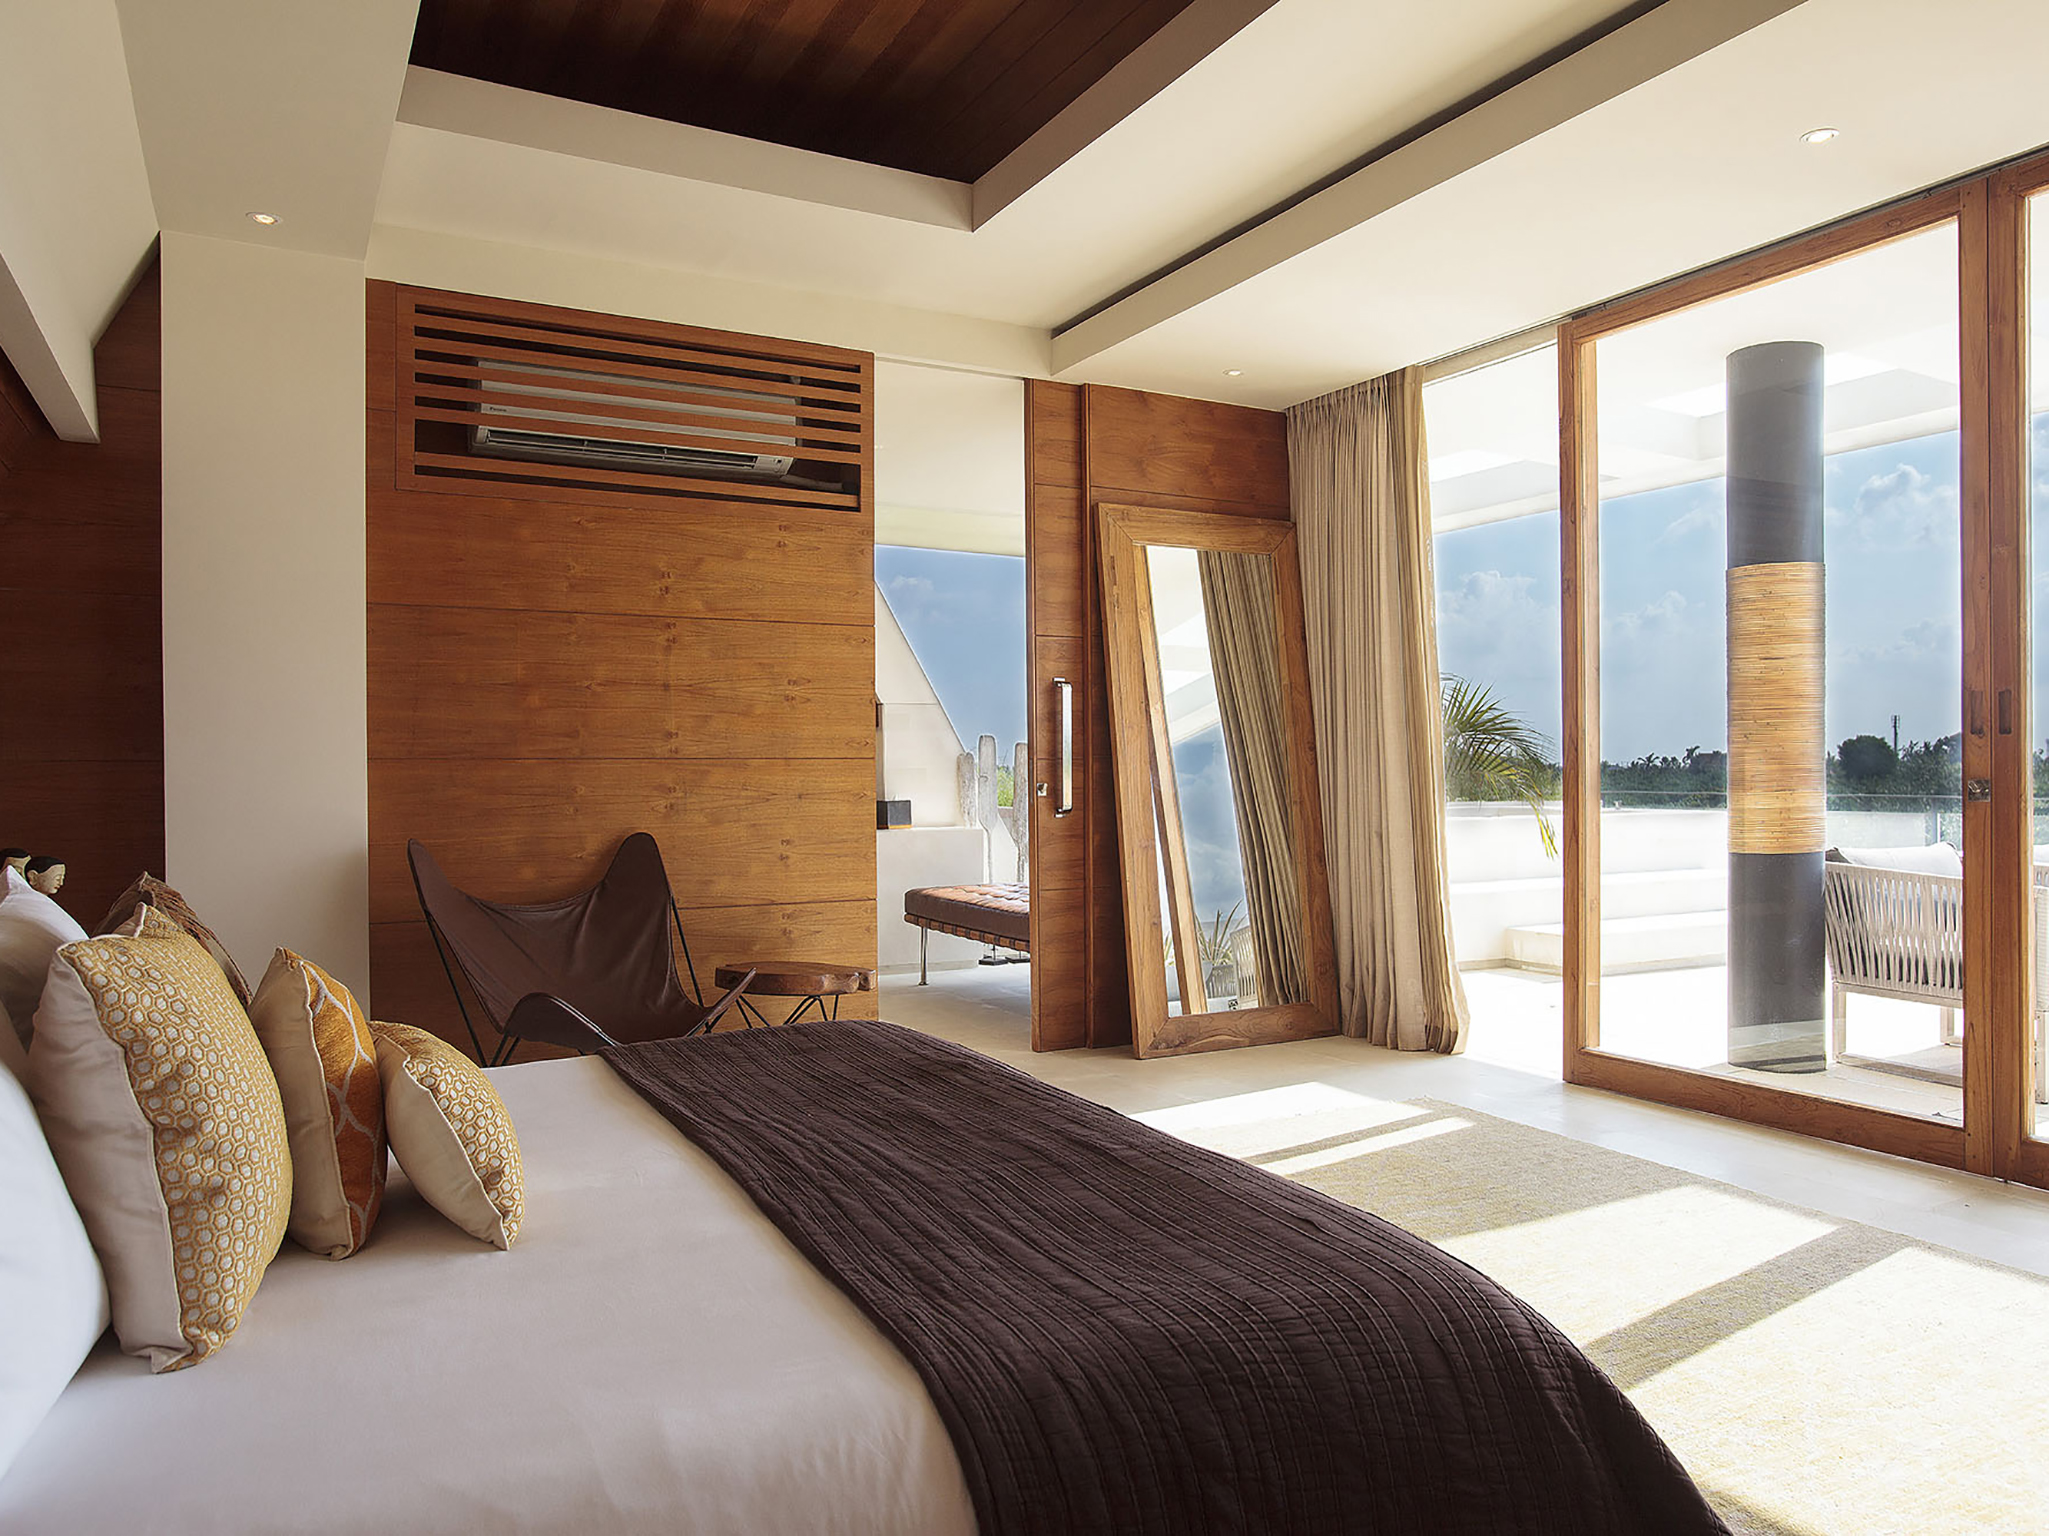 The Iman Villa - Master bedroom view to the deck - The Iman Villa, Canggu, Bali